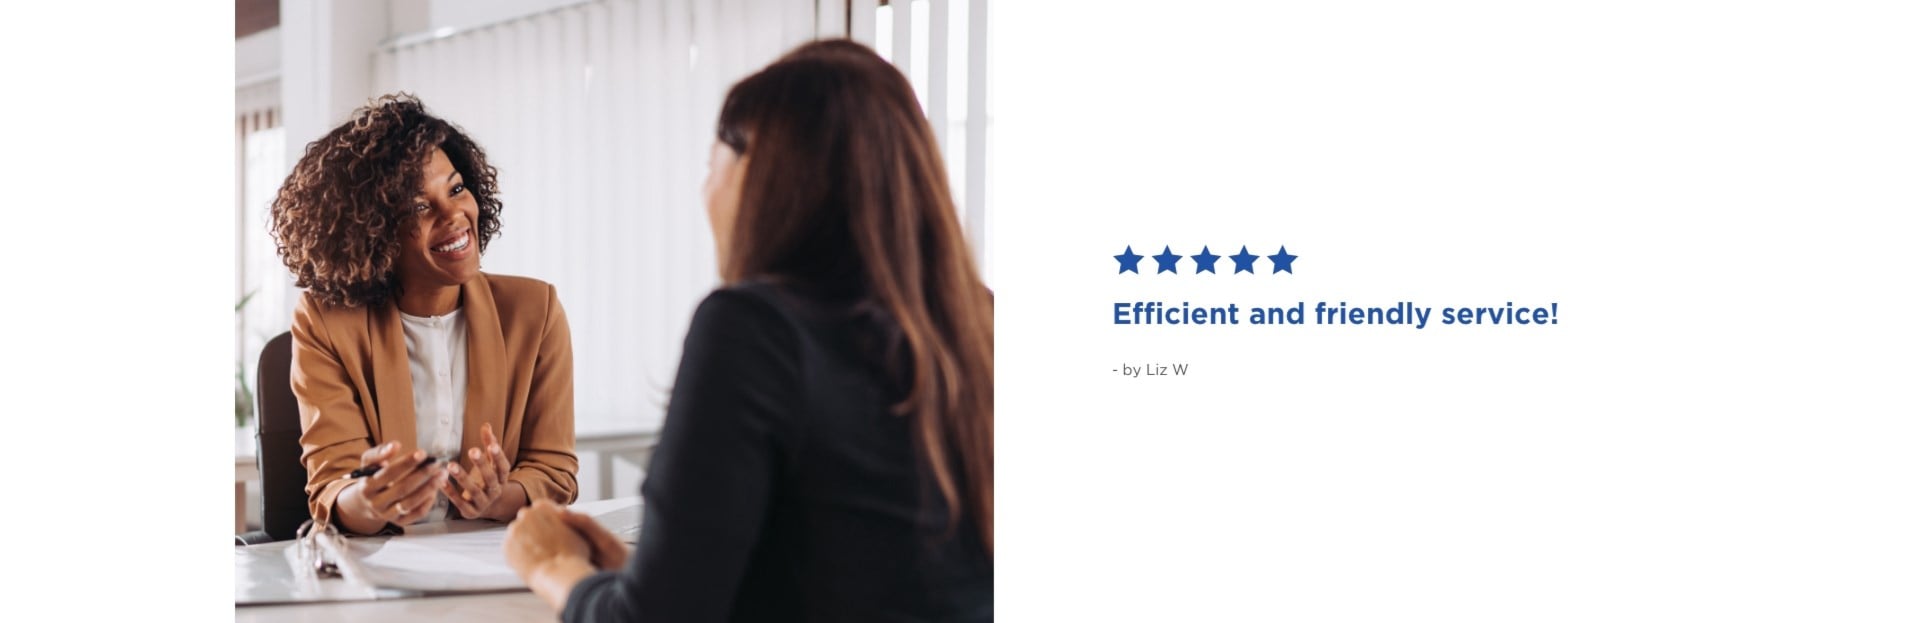 Efficient and friendly service! | 5 stars | - by Liz W